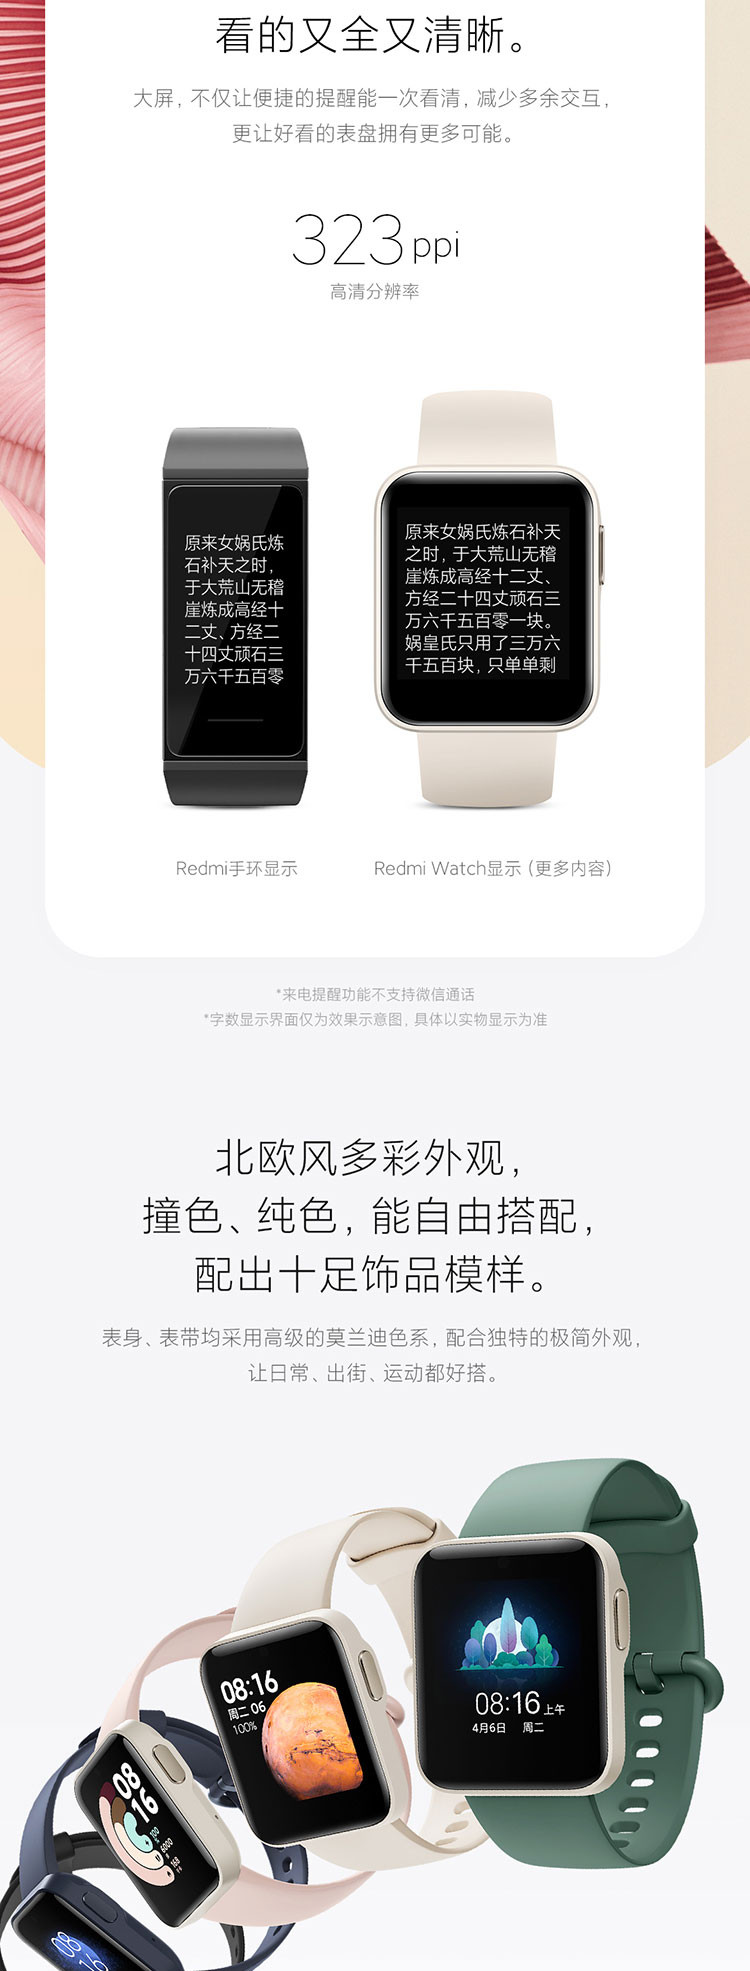 Redmi Watch 红米手表 智能手表 运动监测 实时心率追踪 多功能NFC智能语音助手 小方屏